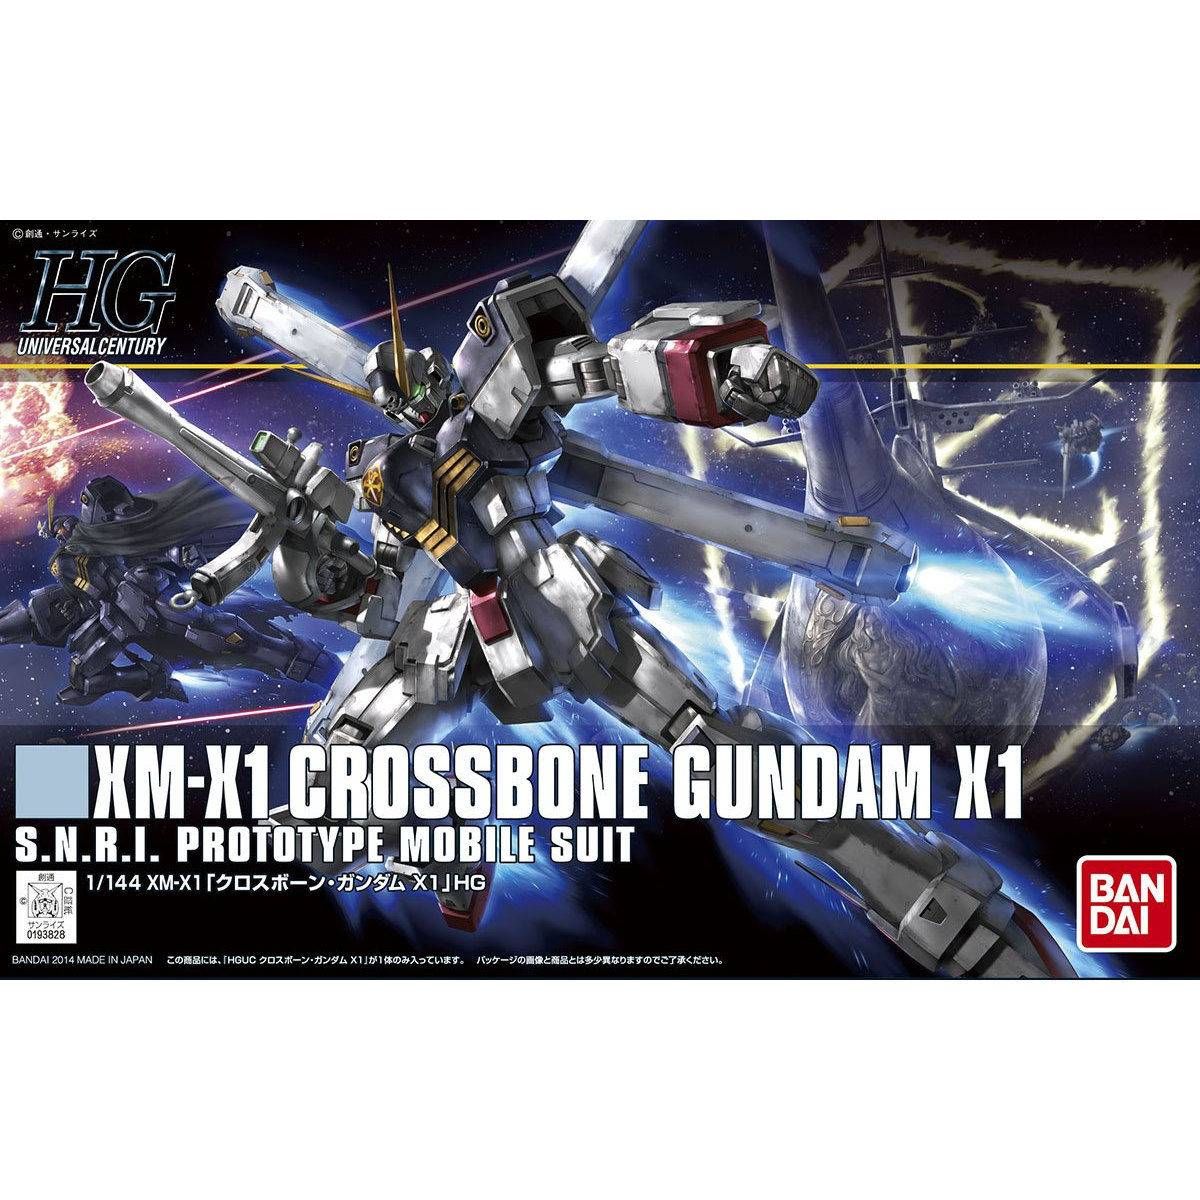 XM-X1 Crossbone Gundam X1 HGUC 1/144